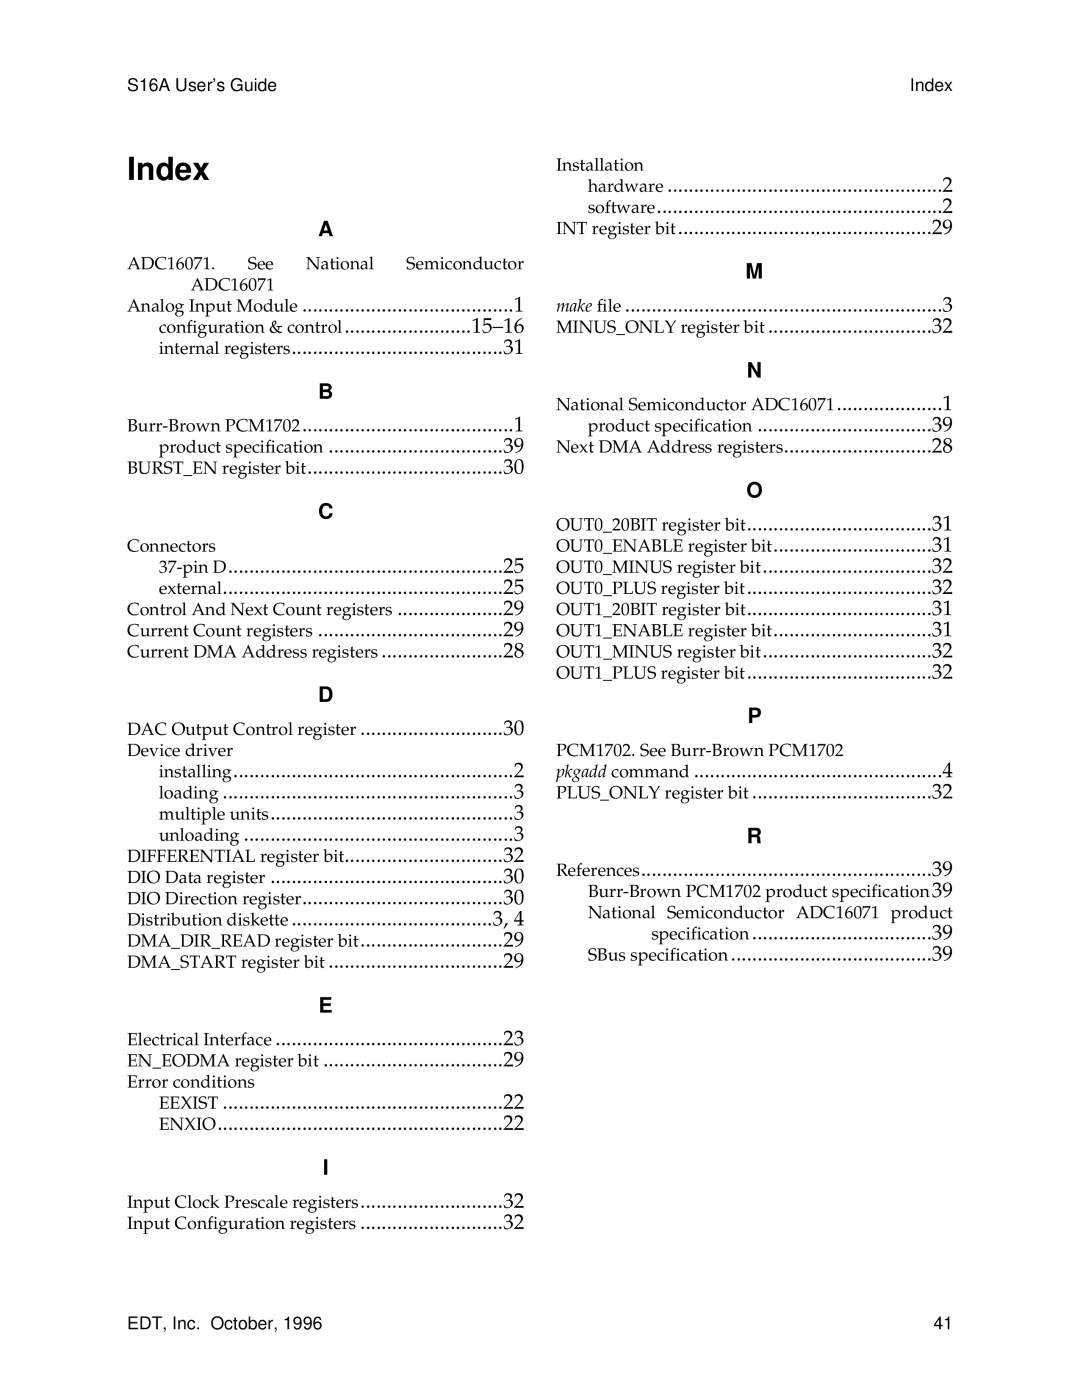 Sun Microsystems S16A manual Index 